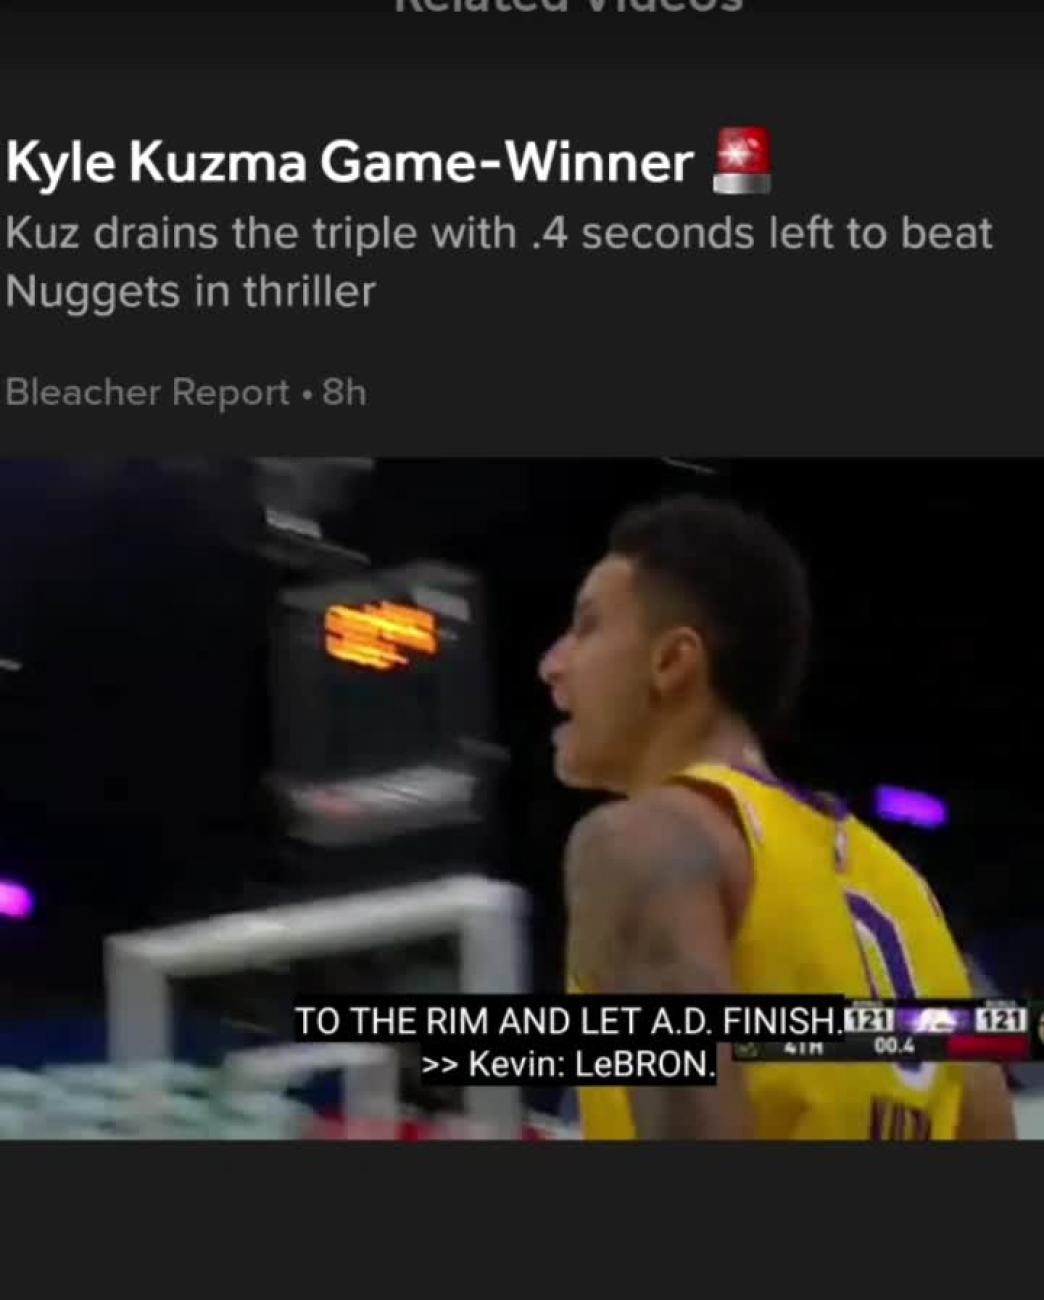 Kyle Kuzma Game-Winner by Bleacher Report.mp4